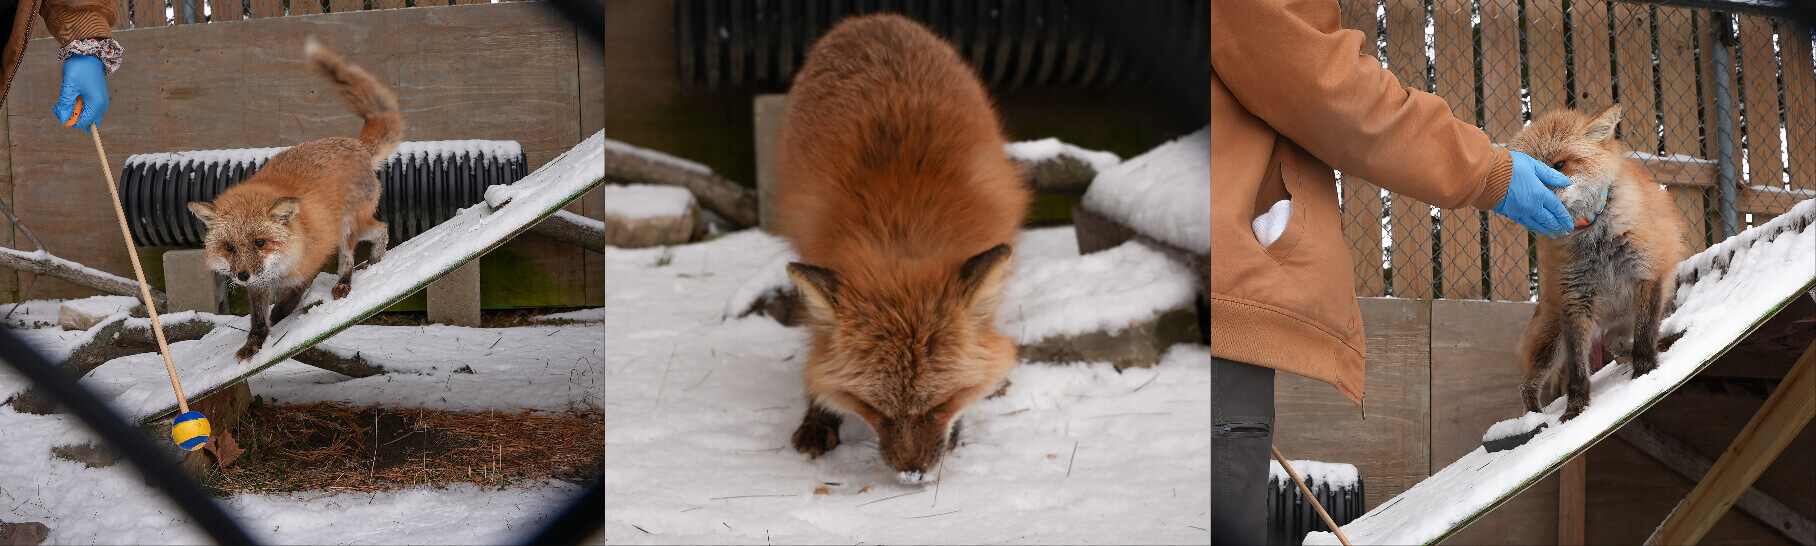 Photos of Penny the fox in rehabilitation training at the Blank Park Zoo